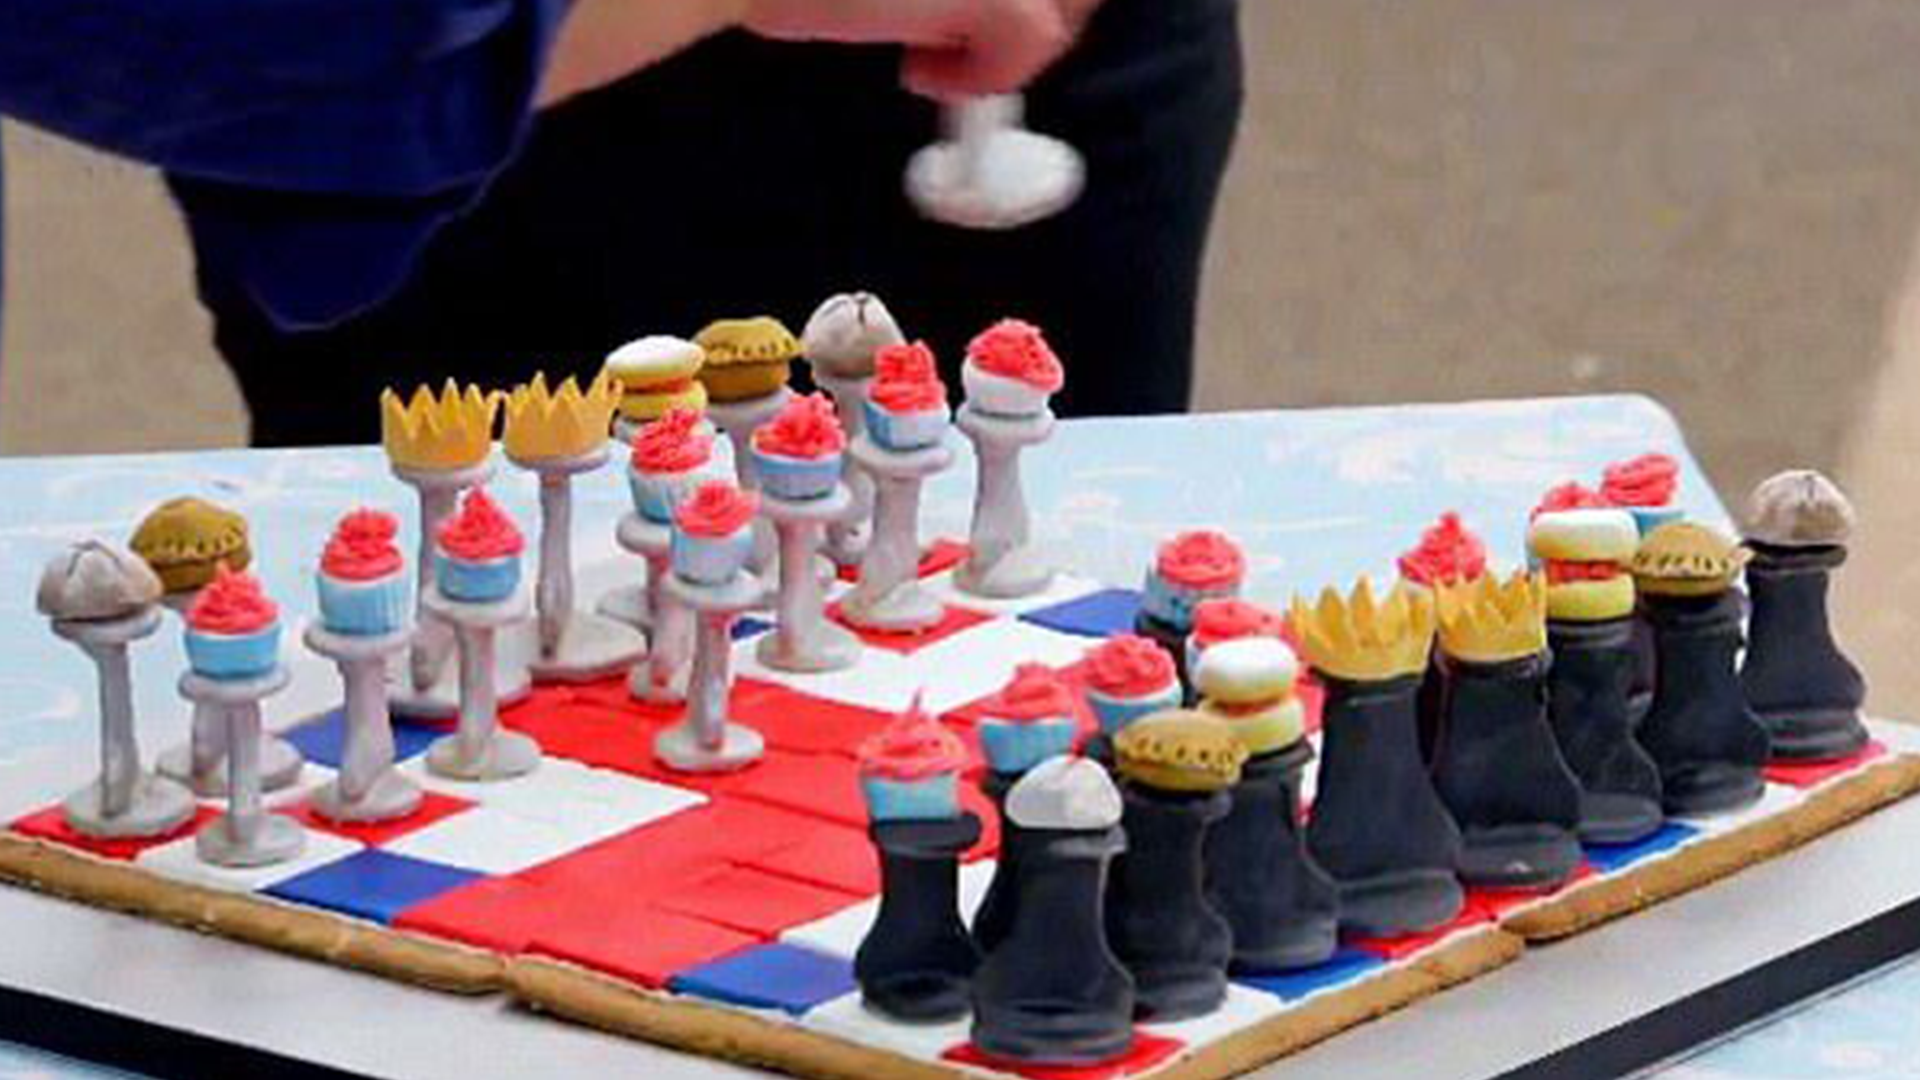 An edible chess game